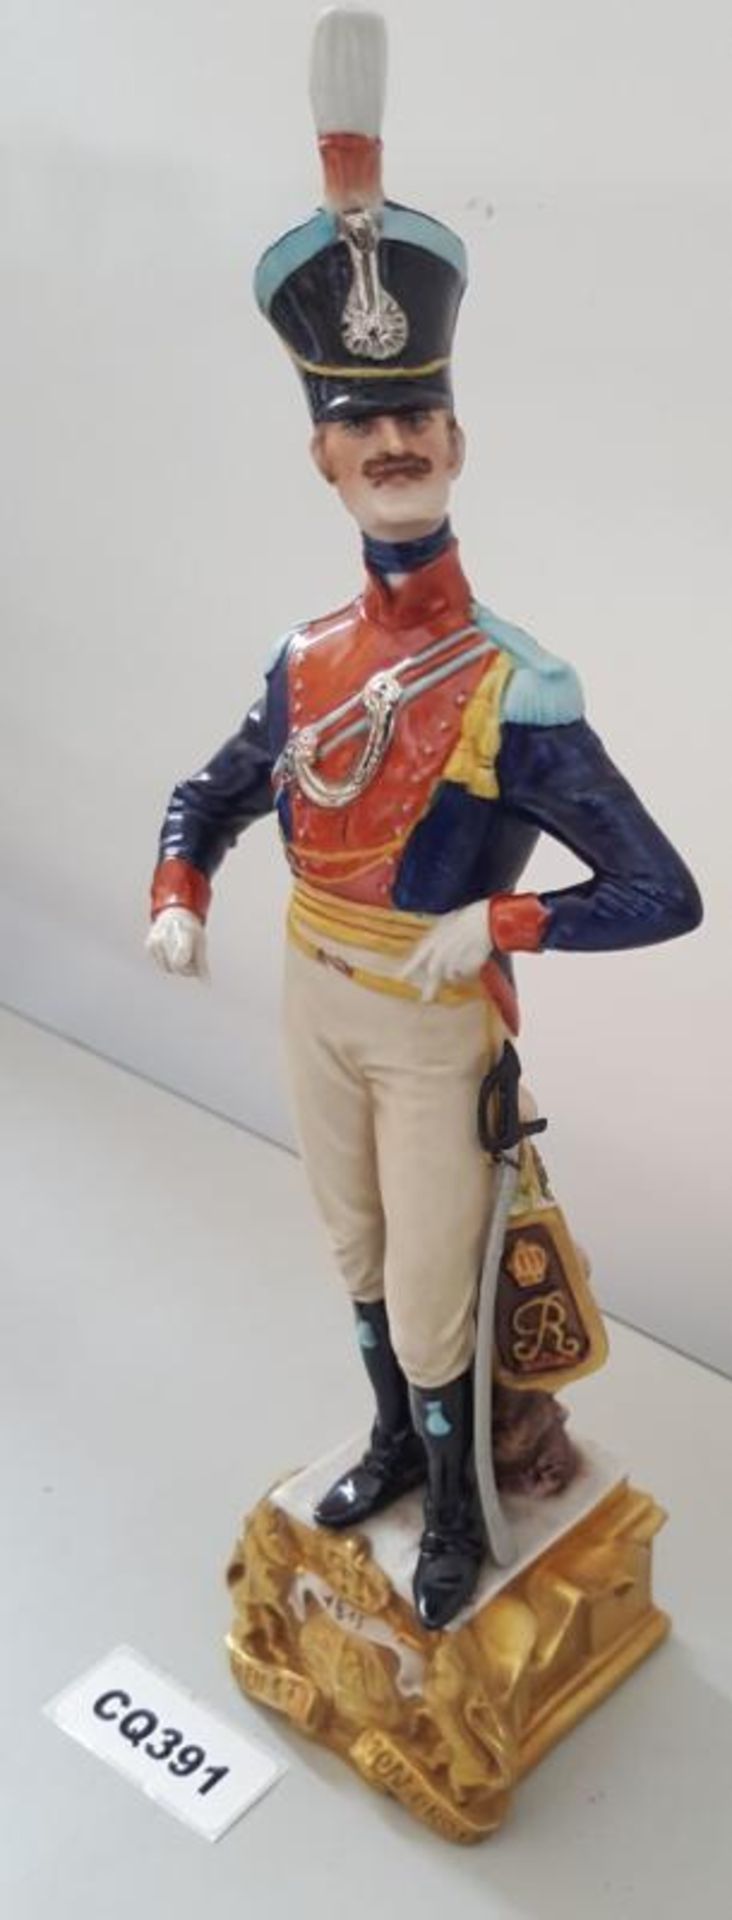 1 x Rare Italian Capodimonte Porcelain Bruno Merli Soldiers Figurines 1815 - Ref CQ391 E - Image 4 of 5